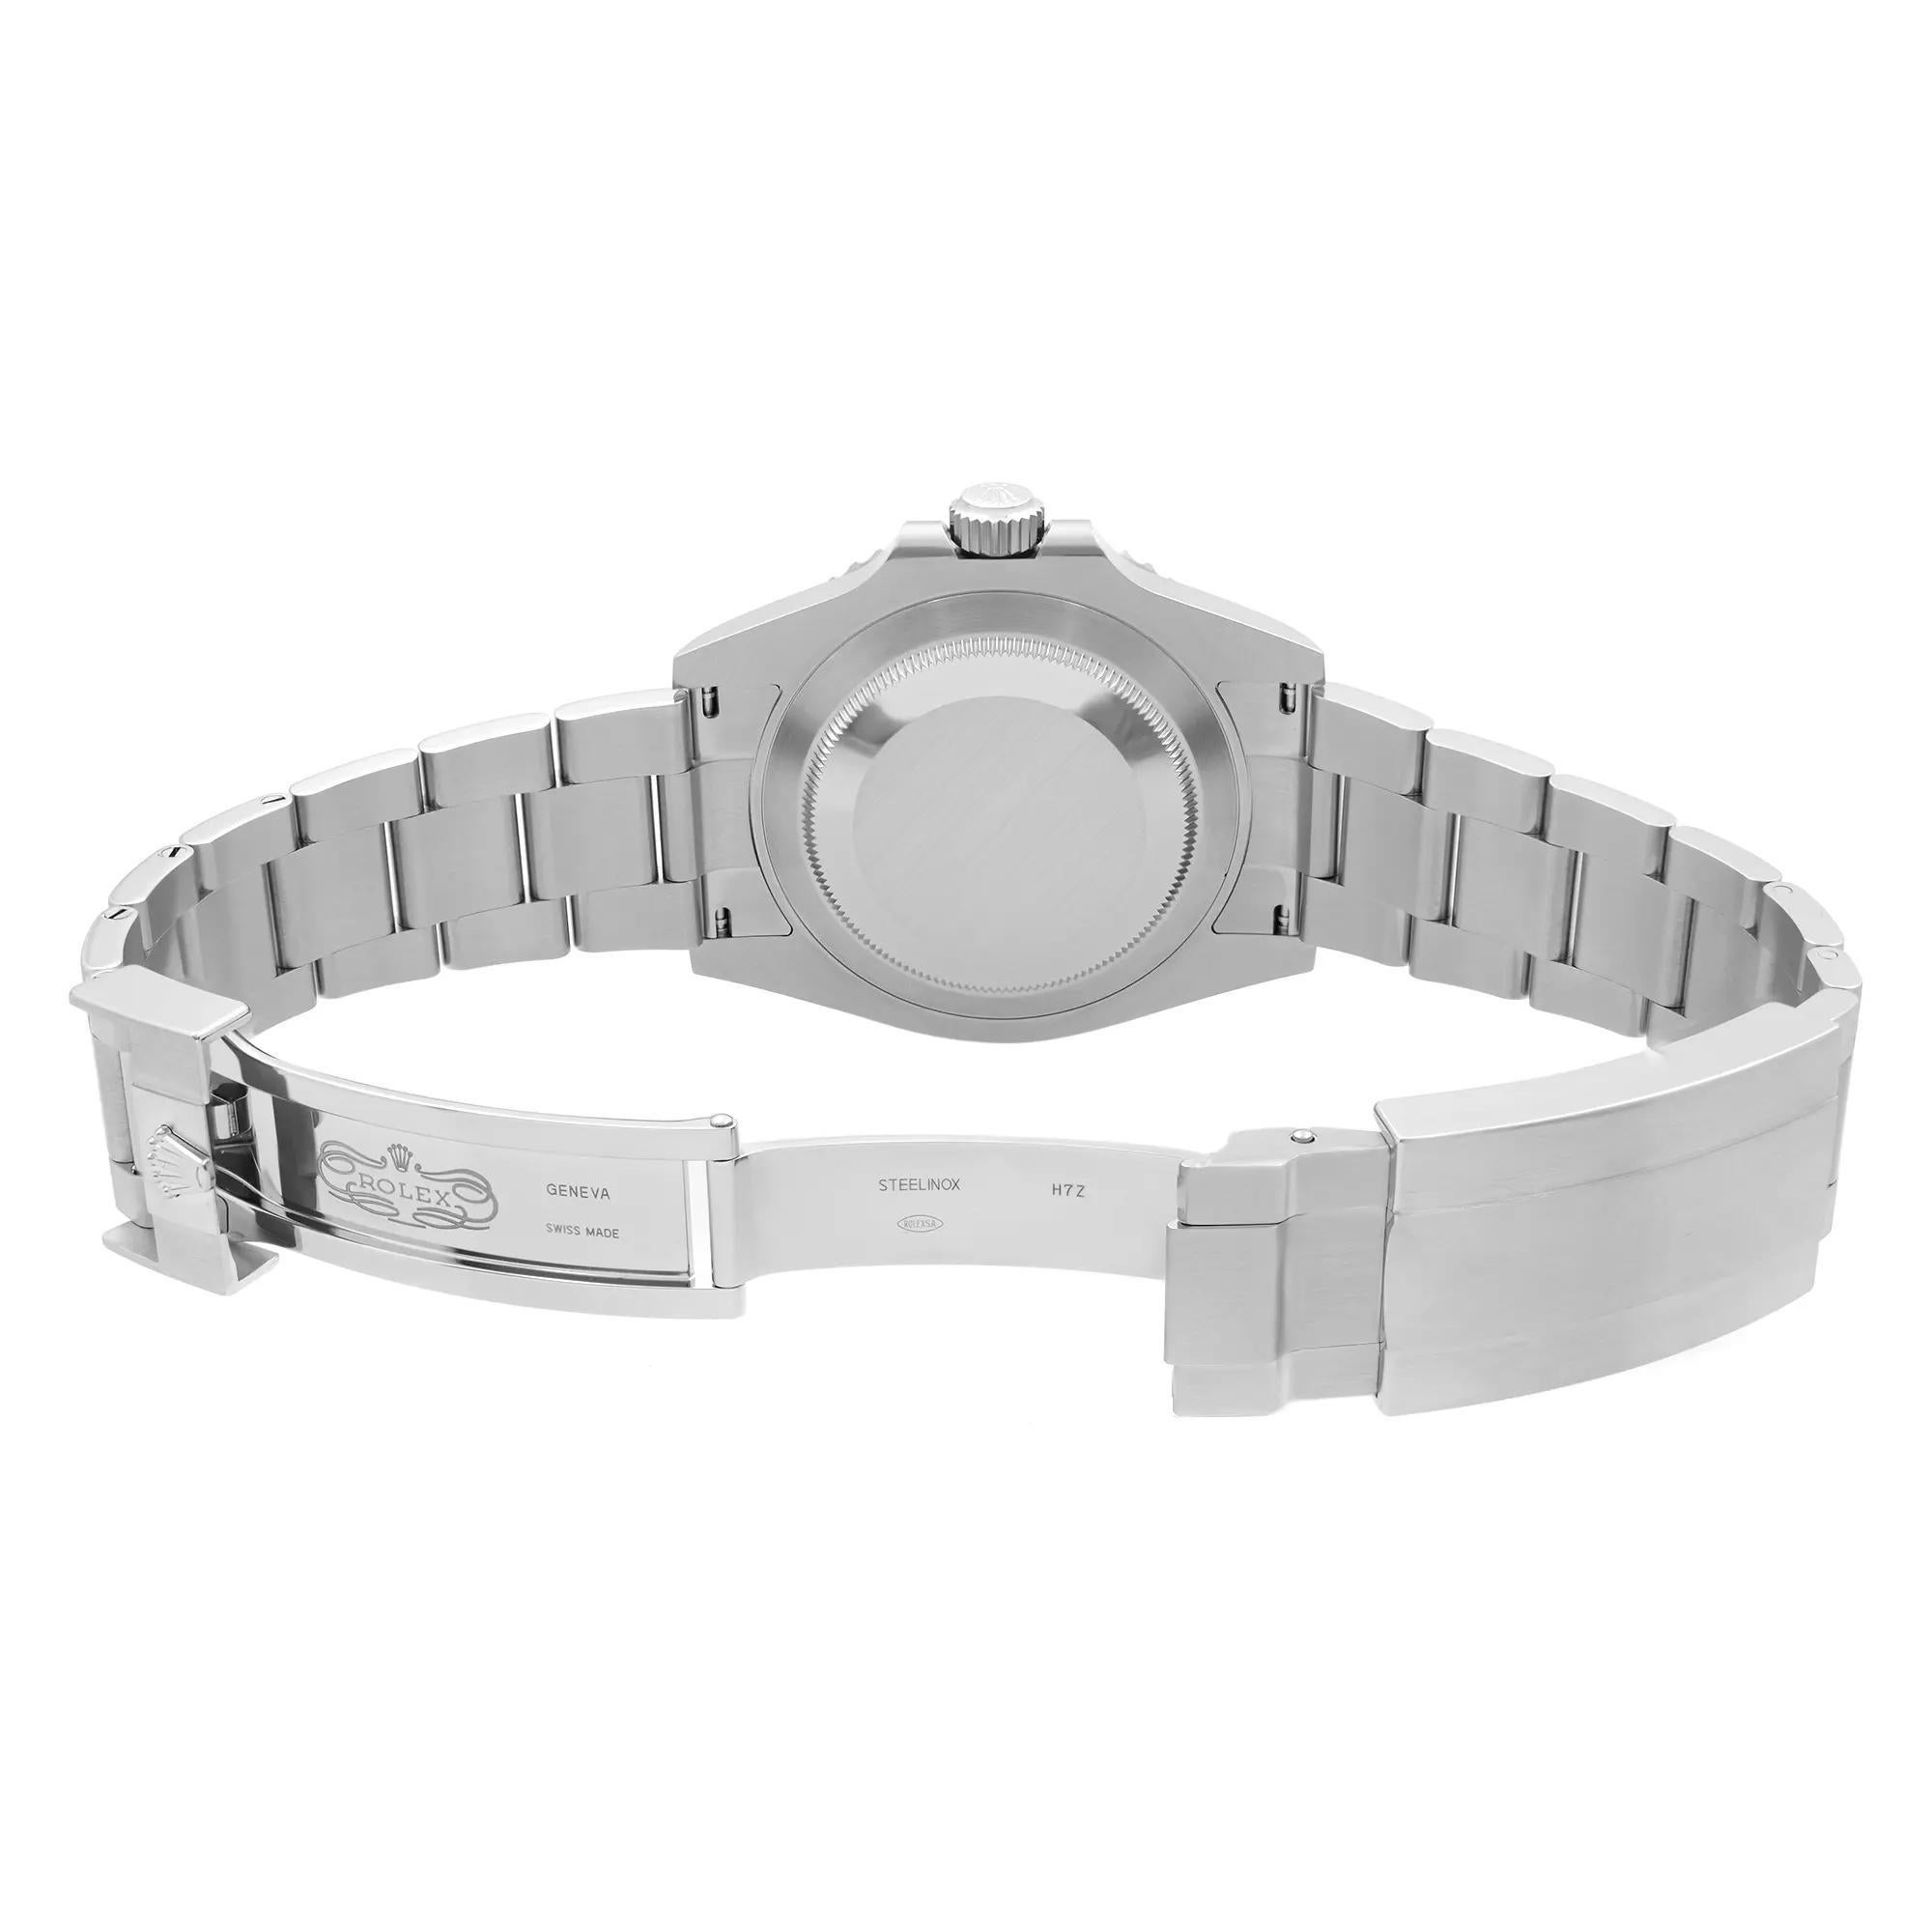 Rolex Submariner Kermit Steel Ceramic Black Dial Automatic Watch 126610LV For Sale 2